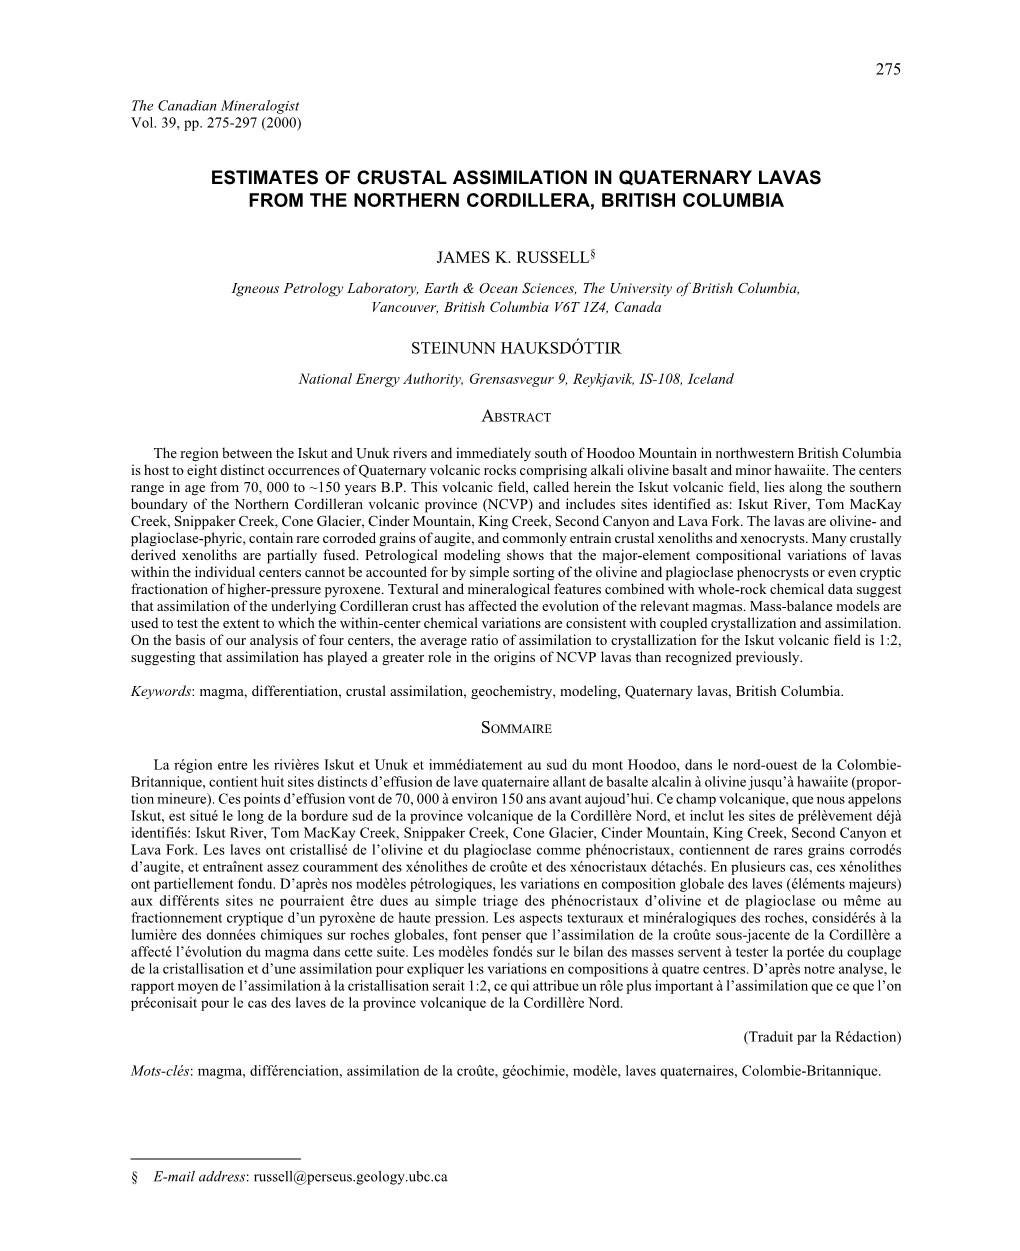 Estimates of Crustal Assimilation in Quaternary Lavas from the Northern Cordillera, British Columbia